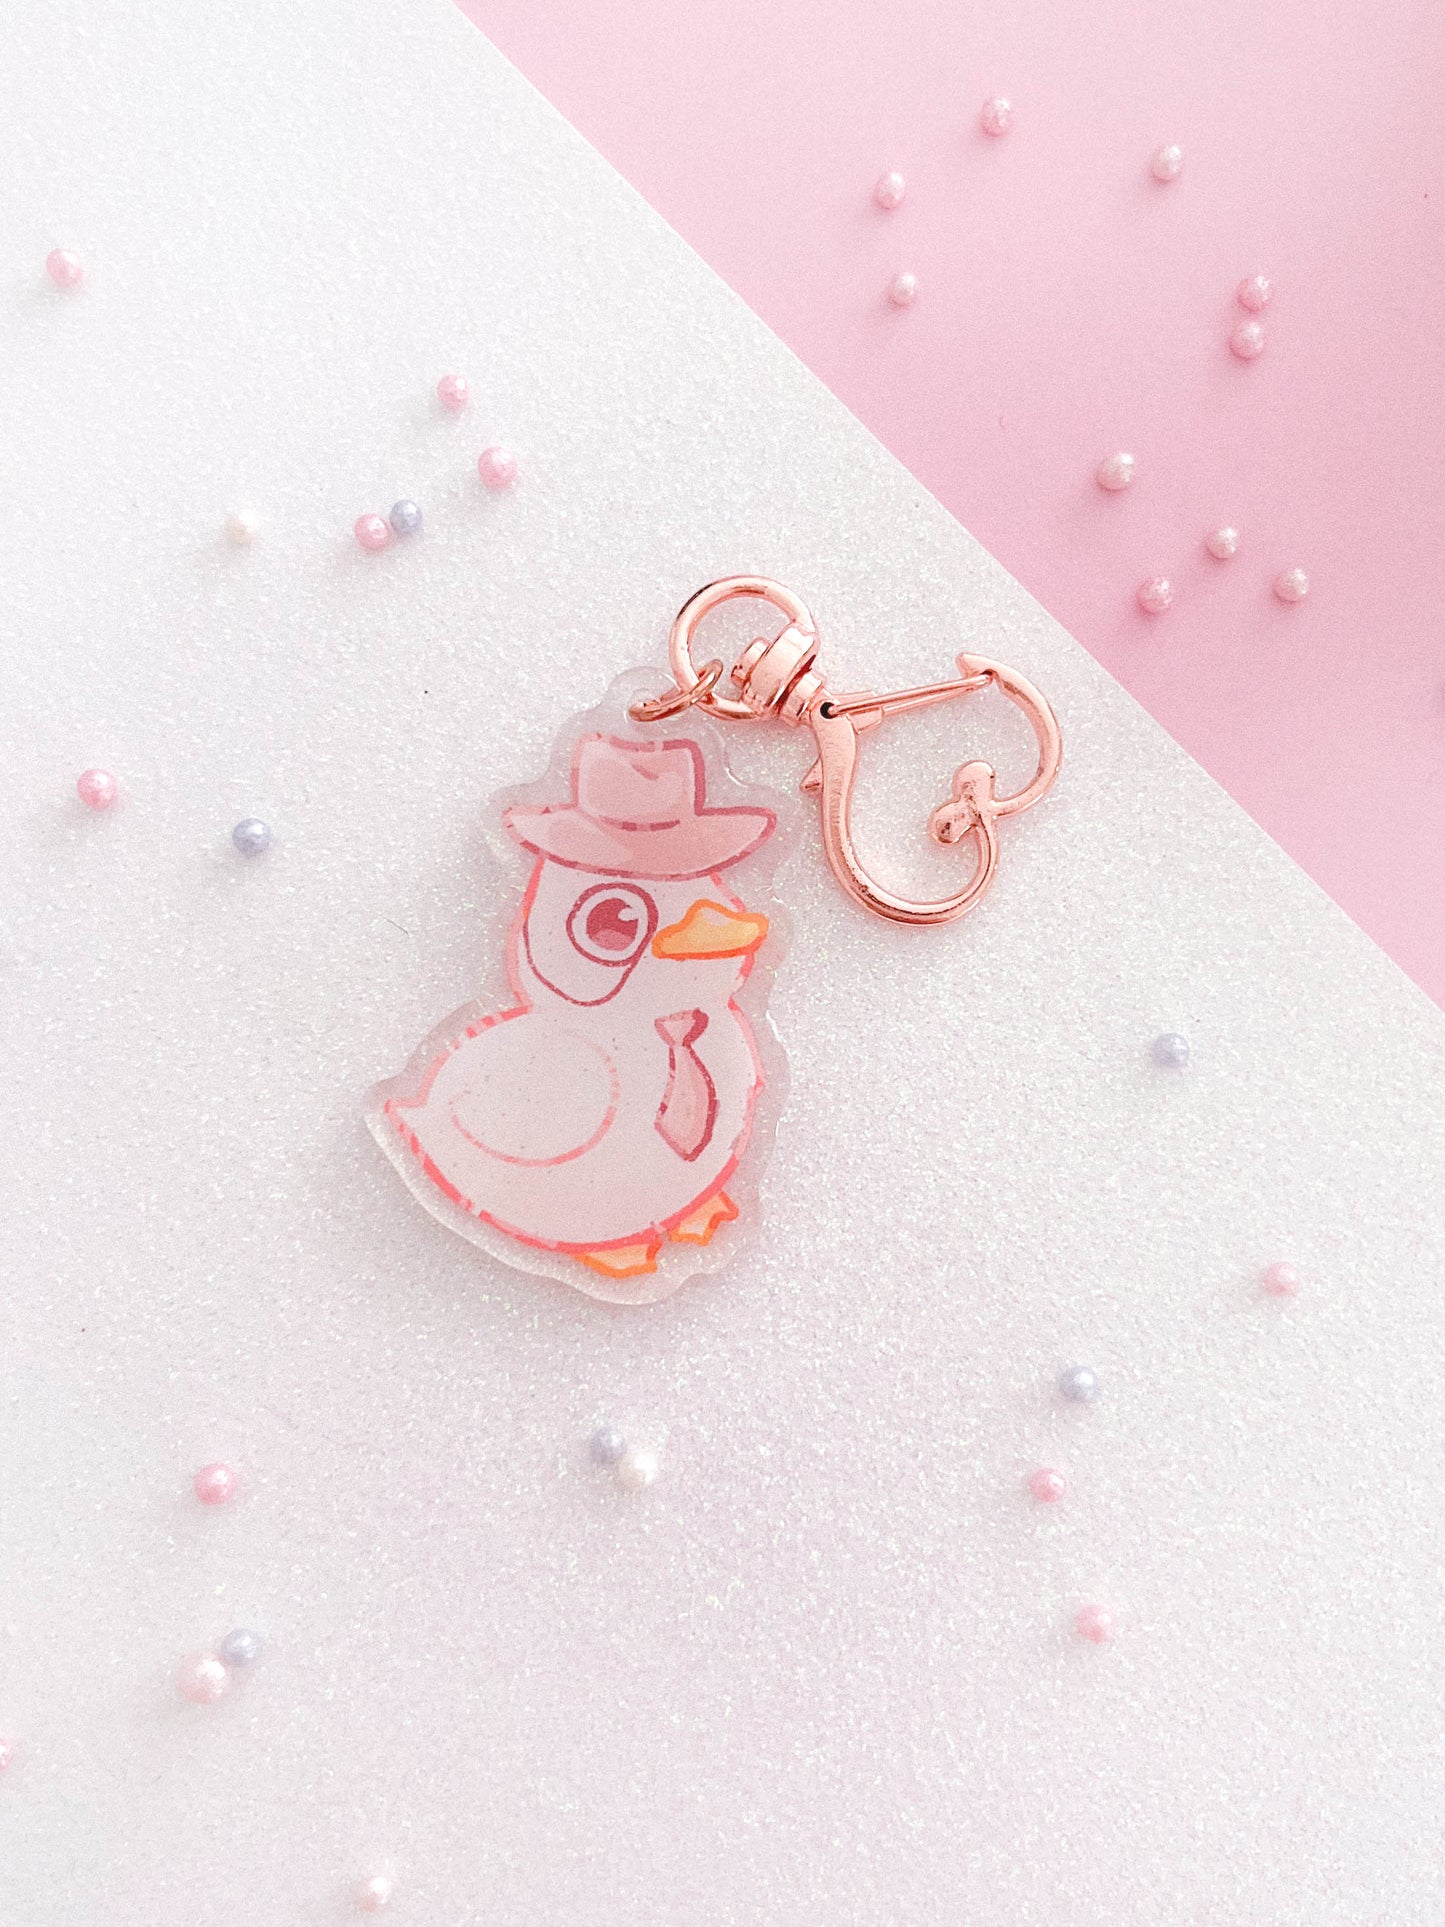 Detective Duck Acrylic Keychain | Sweet Animal Art | Duckling Key Charm | Aesthetic Birthday Gift for Her | Christmas Present | Miamouz